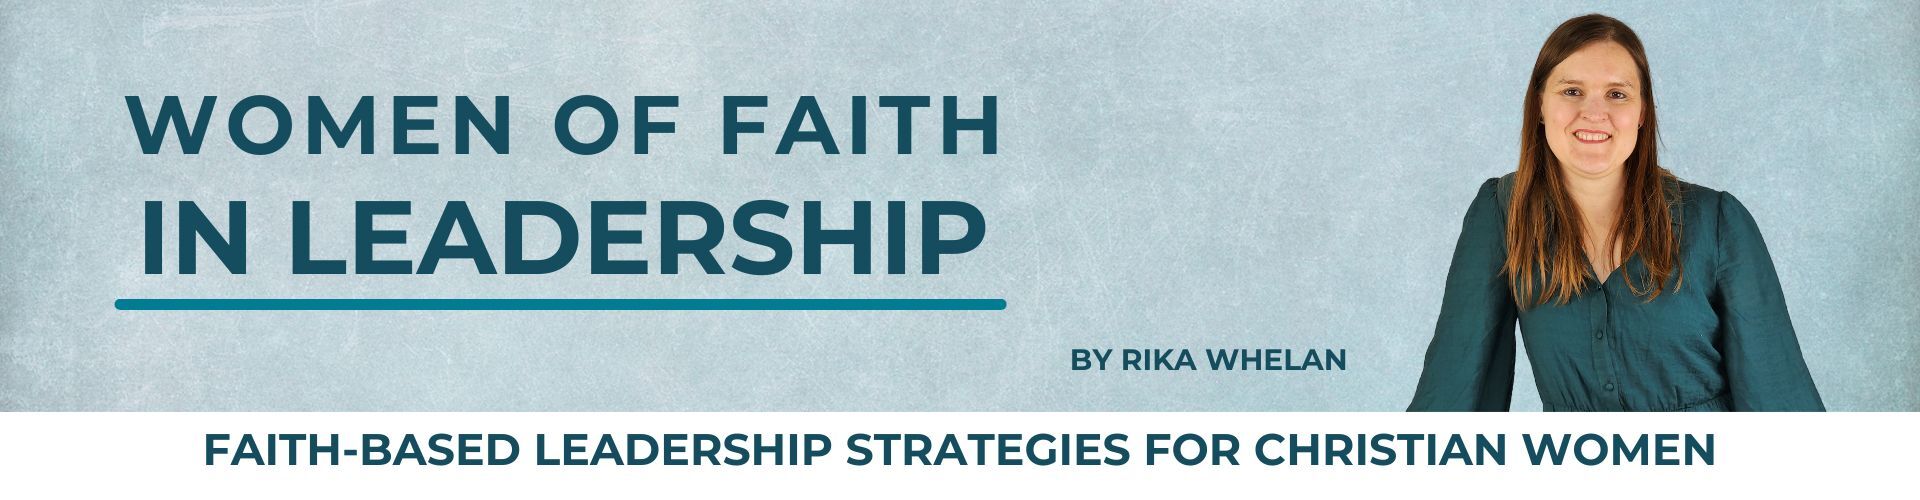 Women of Faith in Leadership - Kingdom Leadership, Workplace Organisational culture, Christian women